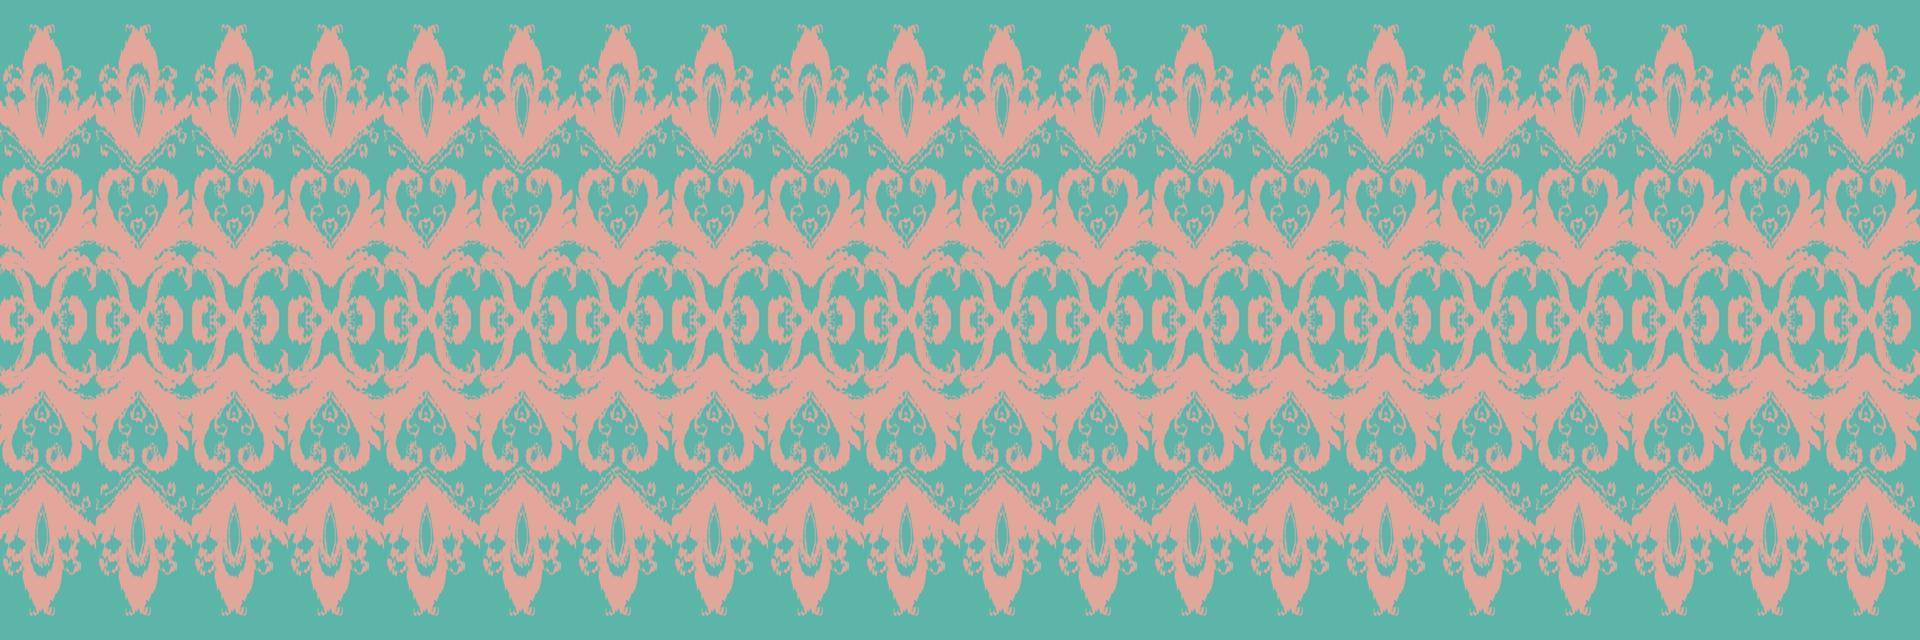 batik textil ikkat o ikat flores patrón sin costuras diseño vectorial digital para imprimir saree kurti borneo borde de tela símbolos de pincel muestras ropa de fiesta vector